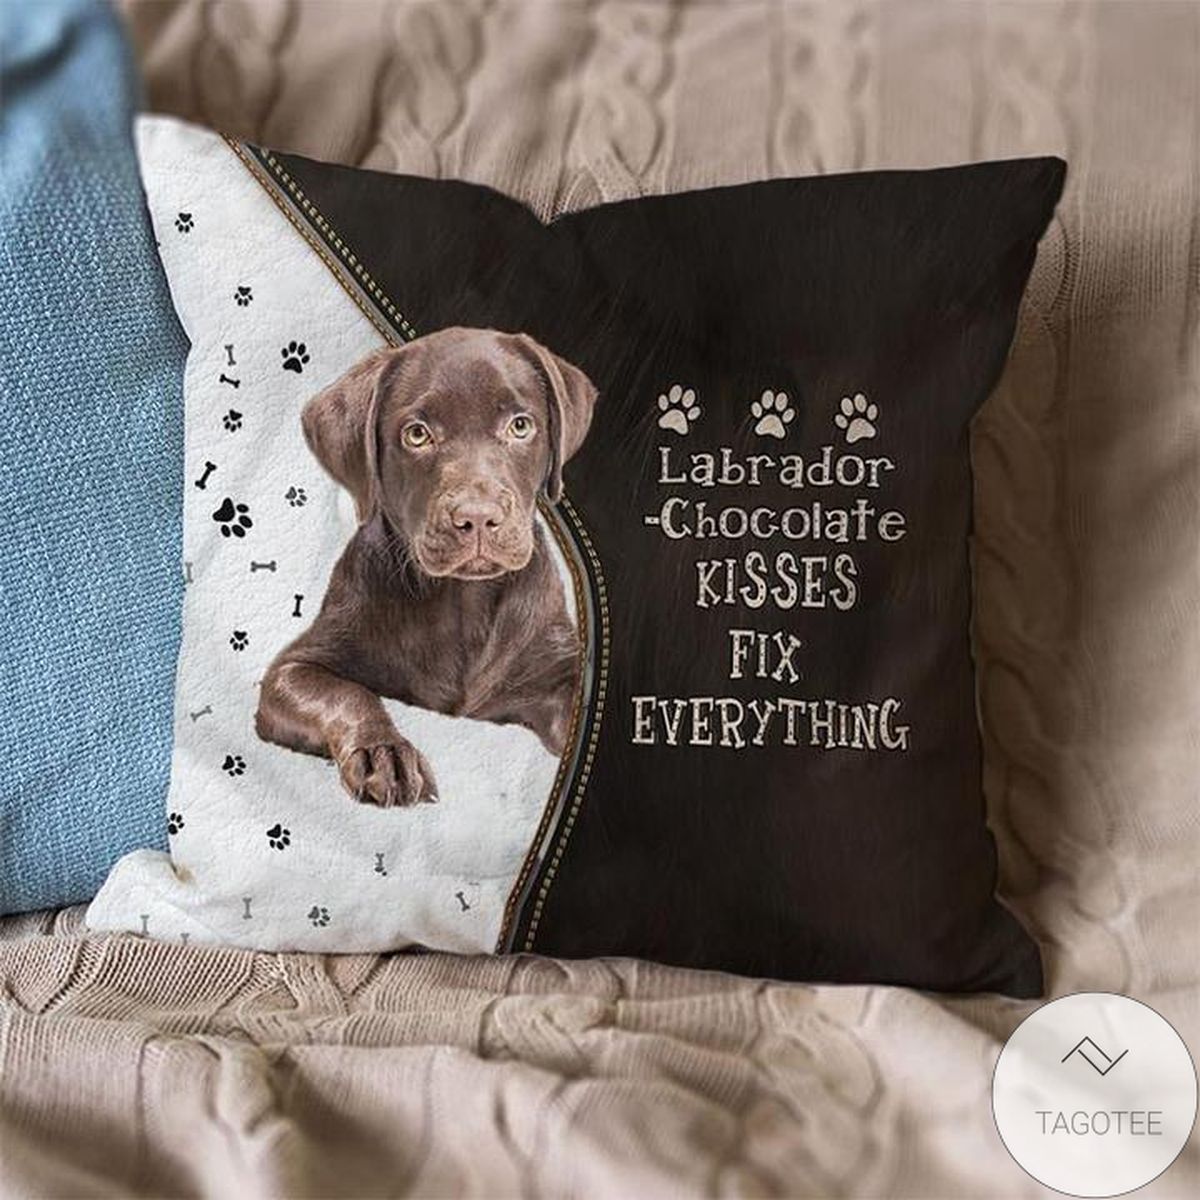 Labrador-Chocolate Kisses Fix Everything Pillowcase